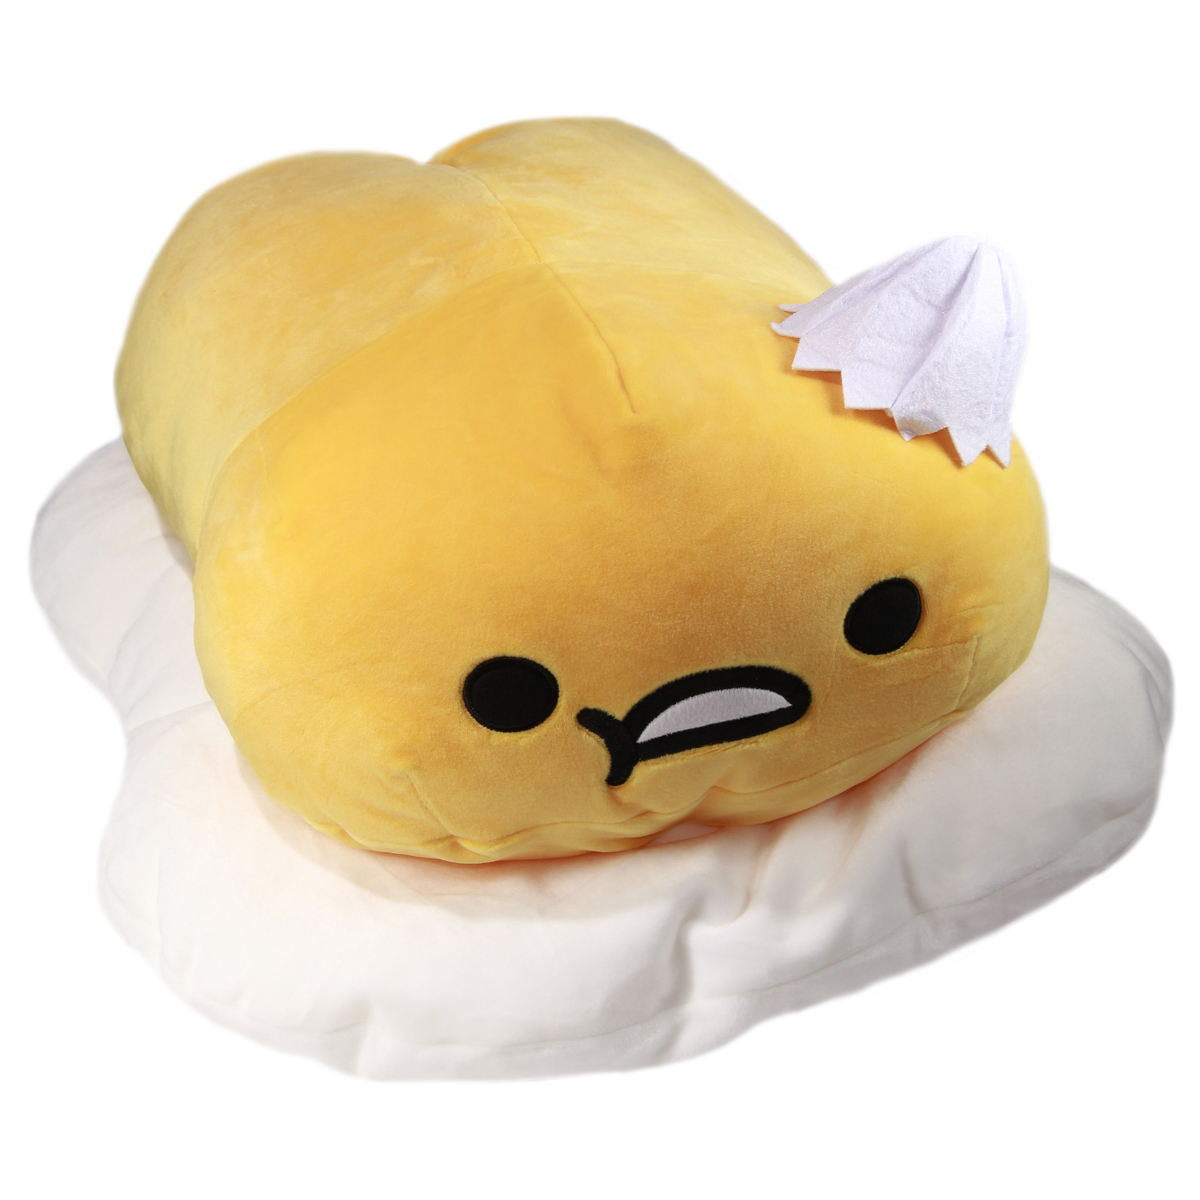 Sanrio, Gudetama Plush Doll, Lazy Egg Lying Down Pose, Super Soft, 16 Inches, Big Size